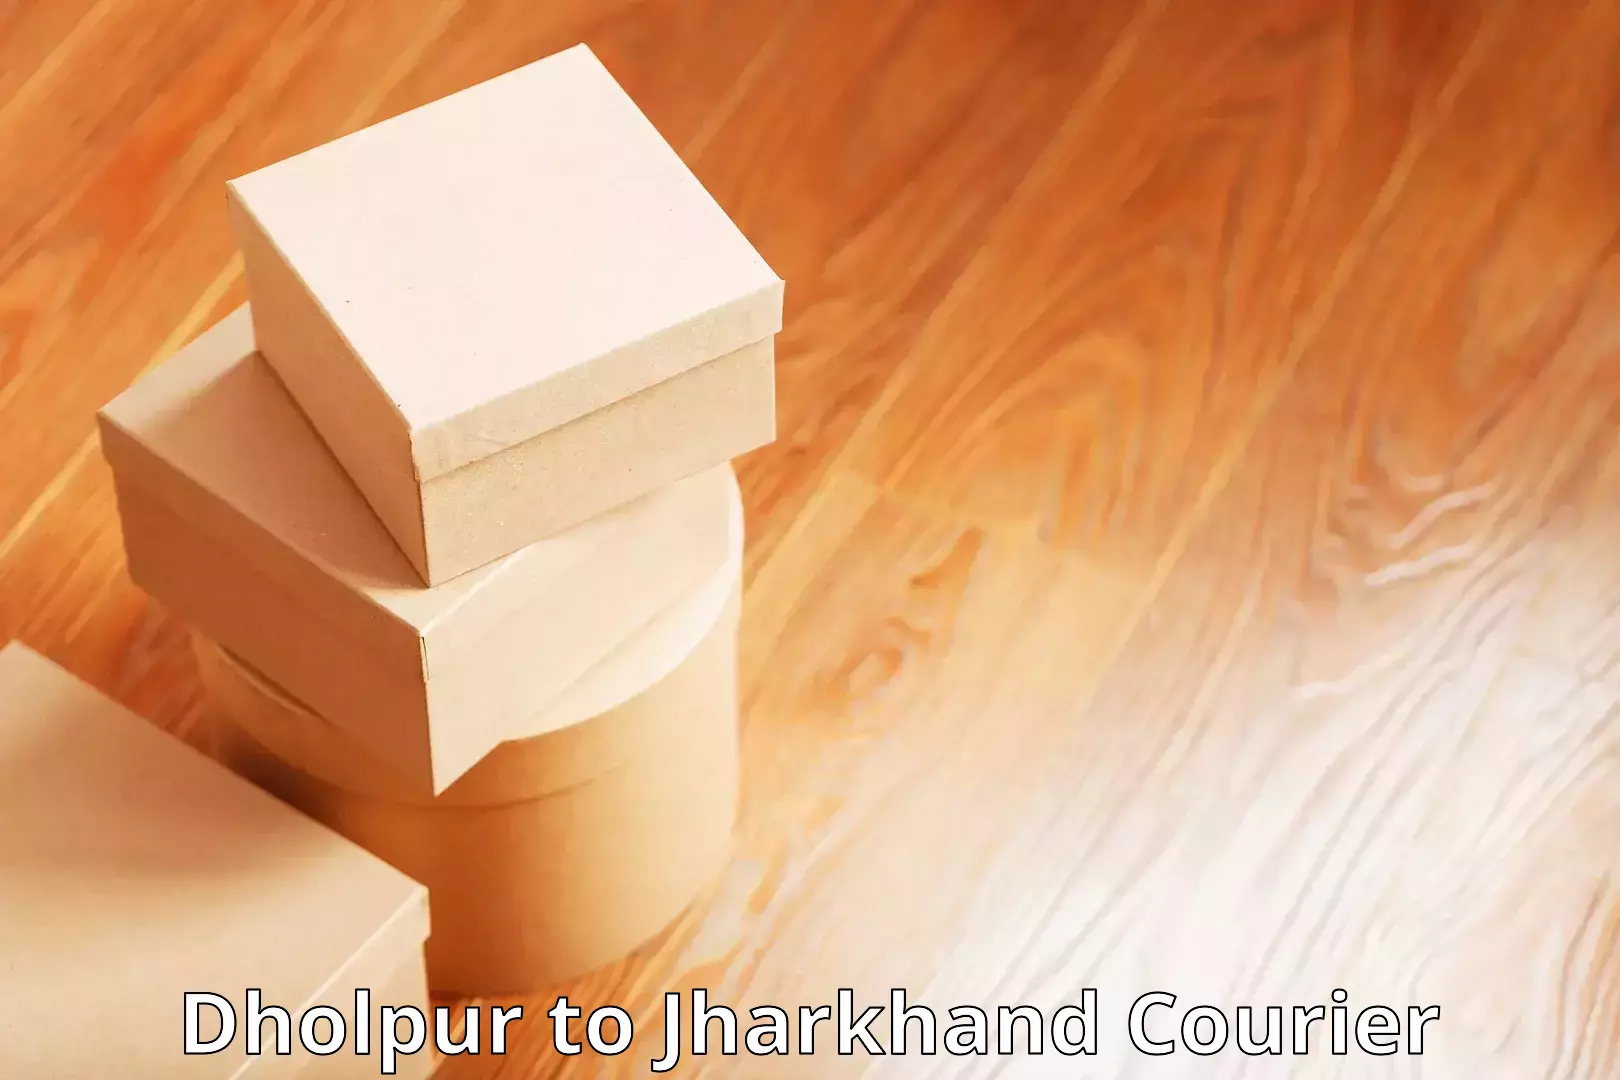 Logistics service provider Dholpur to Jharkhand